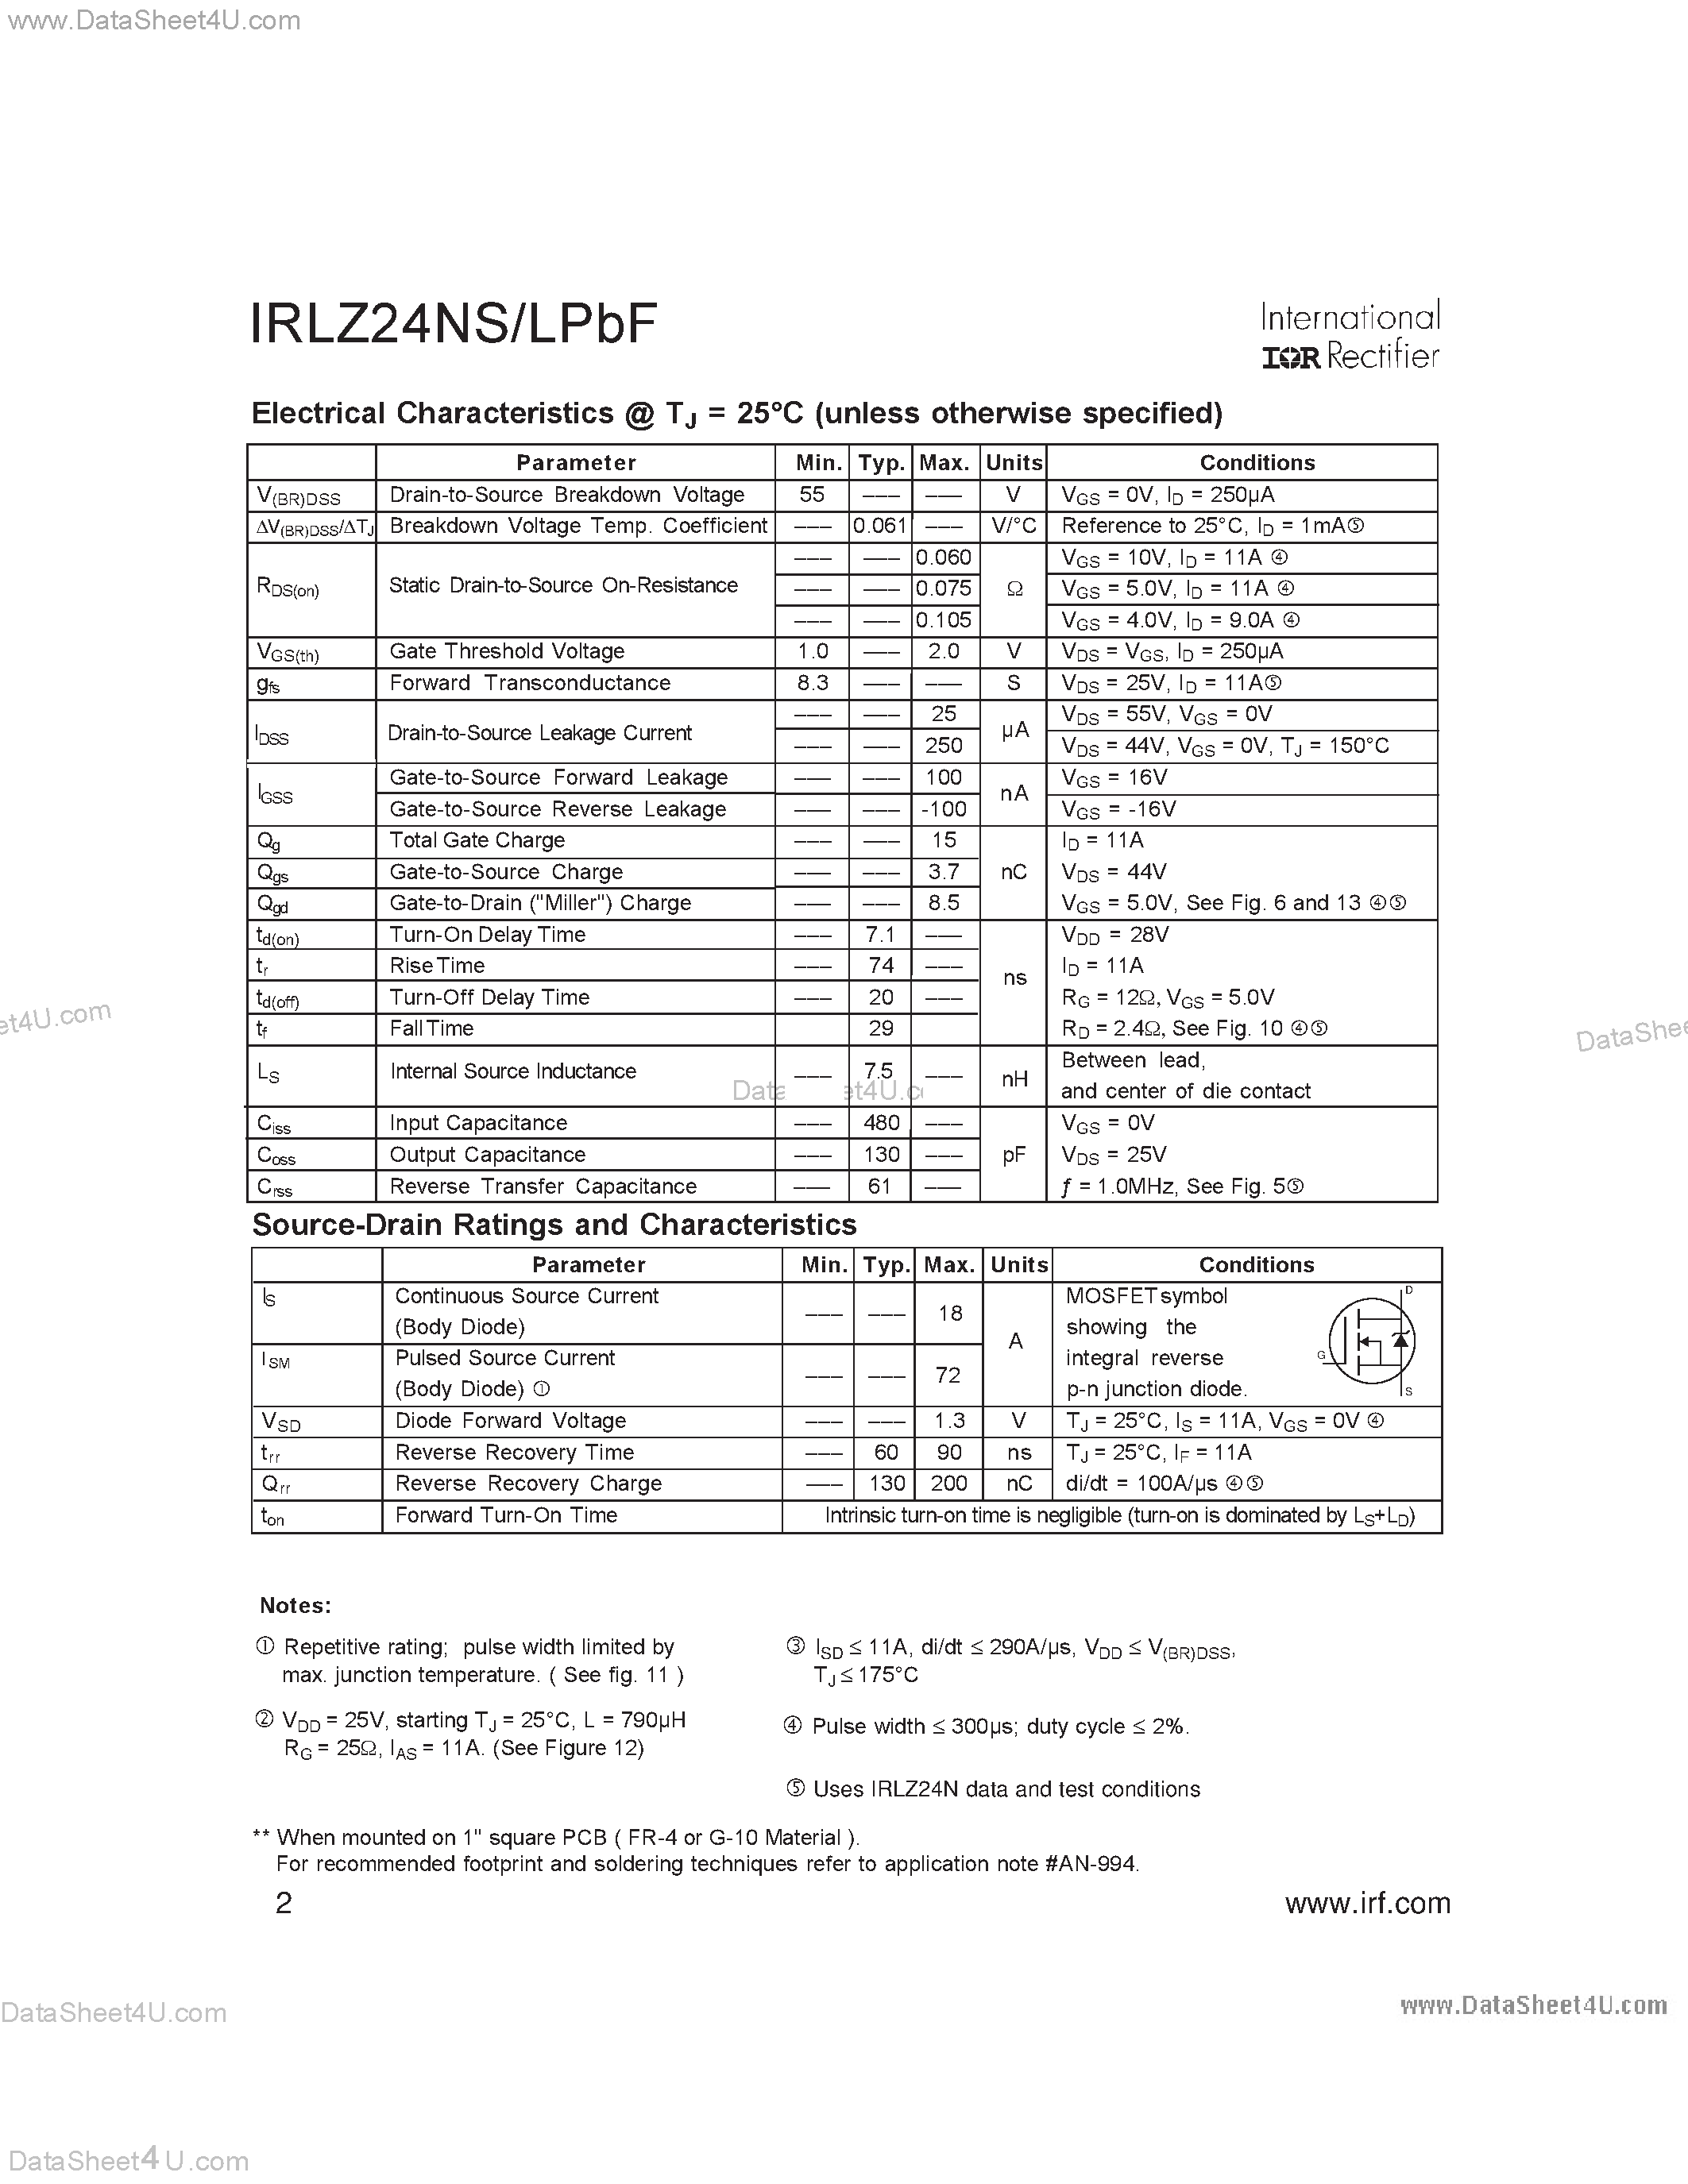 Datasheet IRLZ24NLPBF - (IRLZ24NSPBF / IRLZ24NLPBF) Power MOSFET page 2